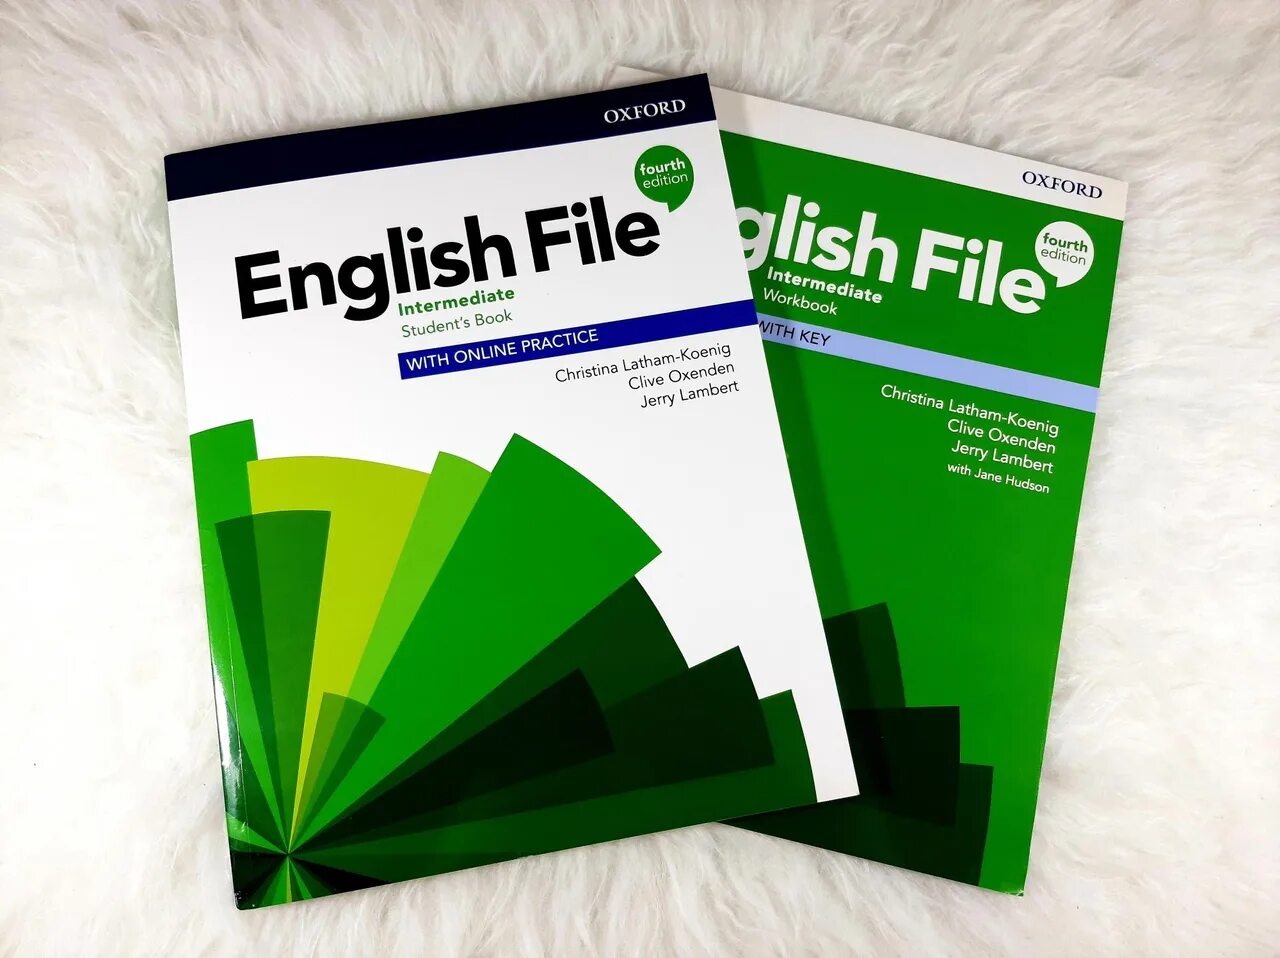 Инглиш файл интермедиат 4 издание. English file. Intermediate. English file 4th Edition. English file pre Intermediate 4th Edition. English file 4 th